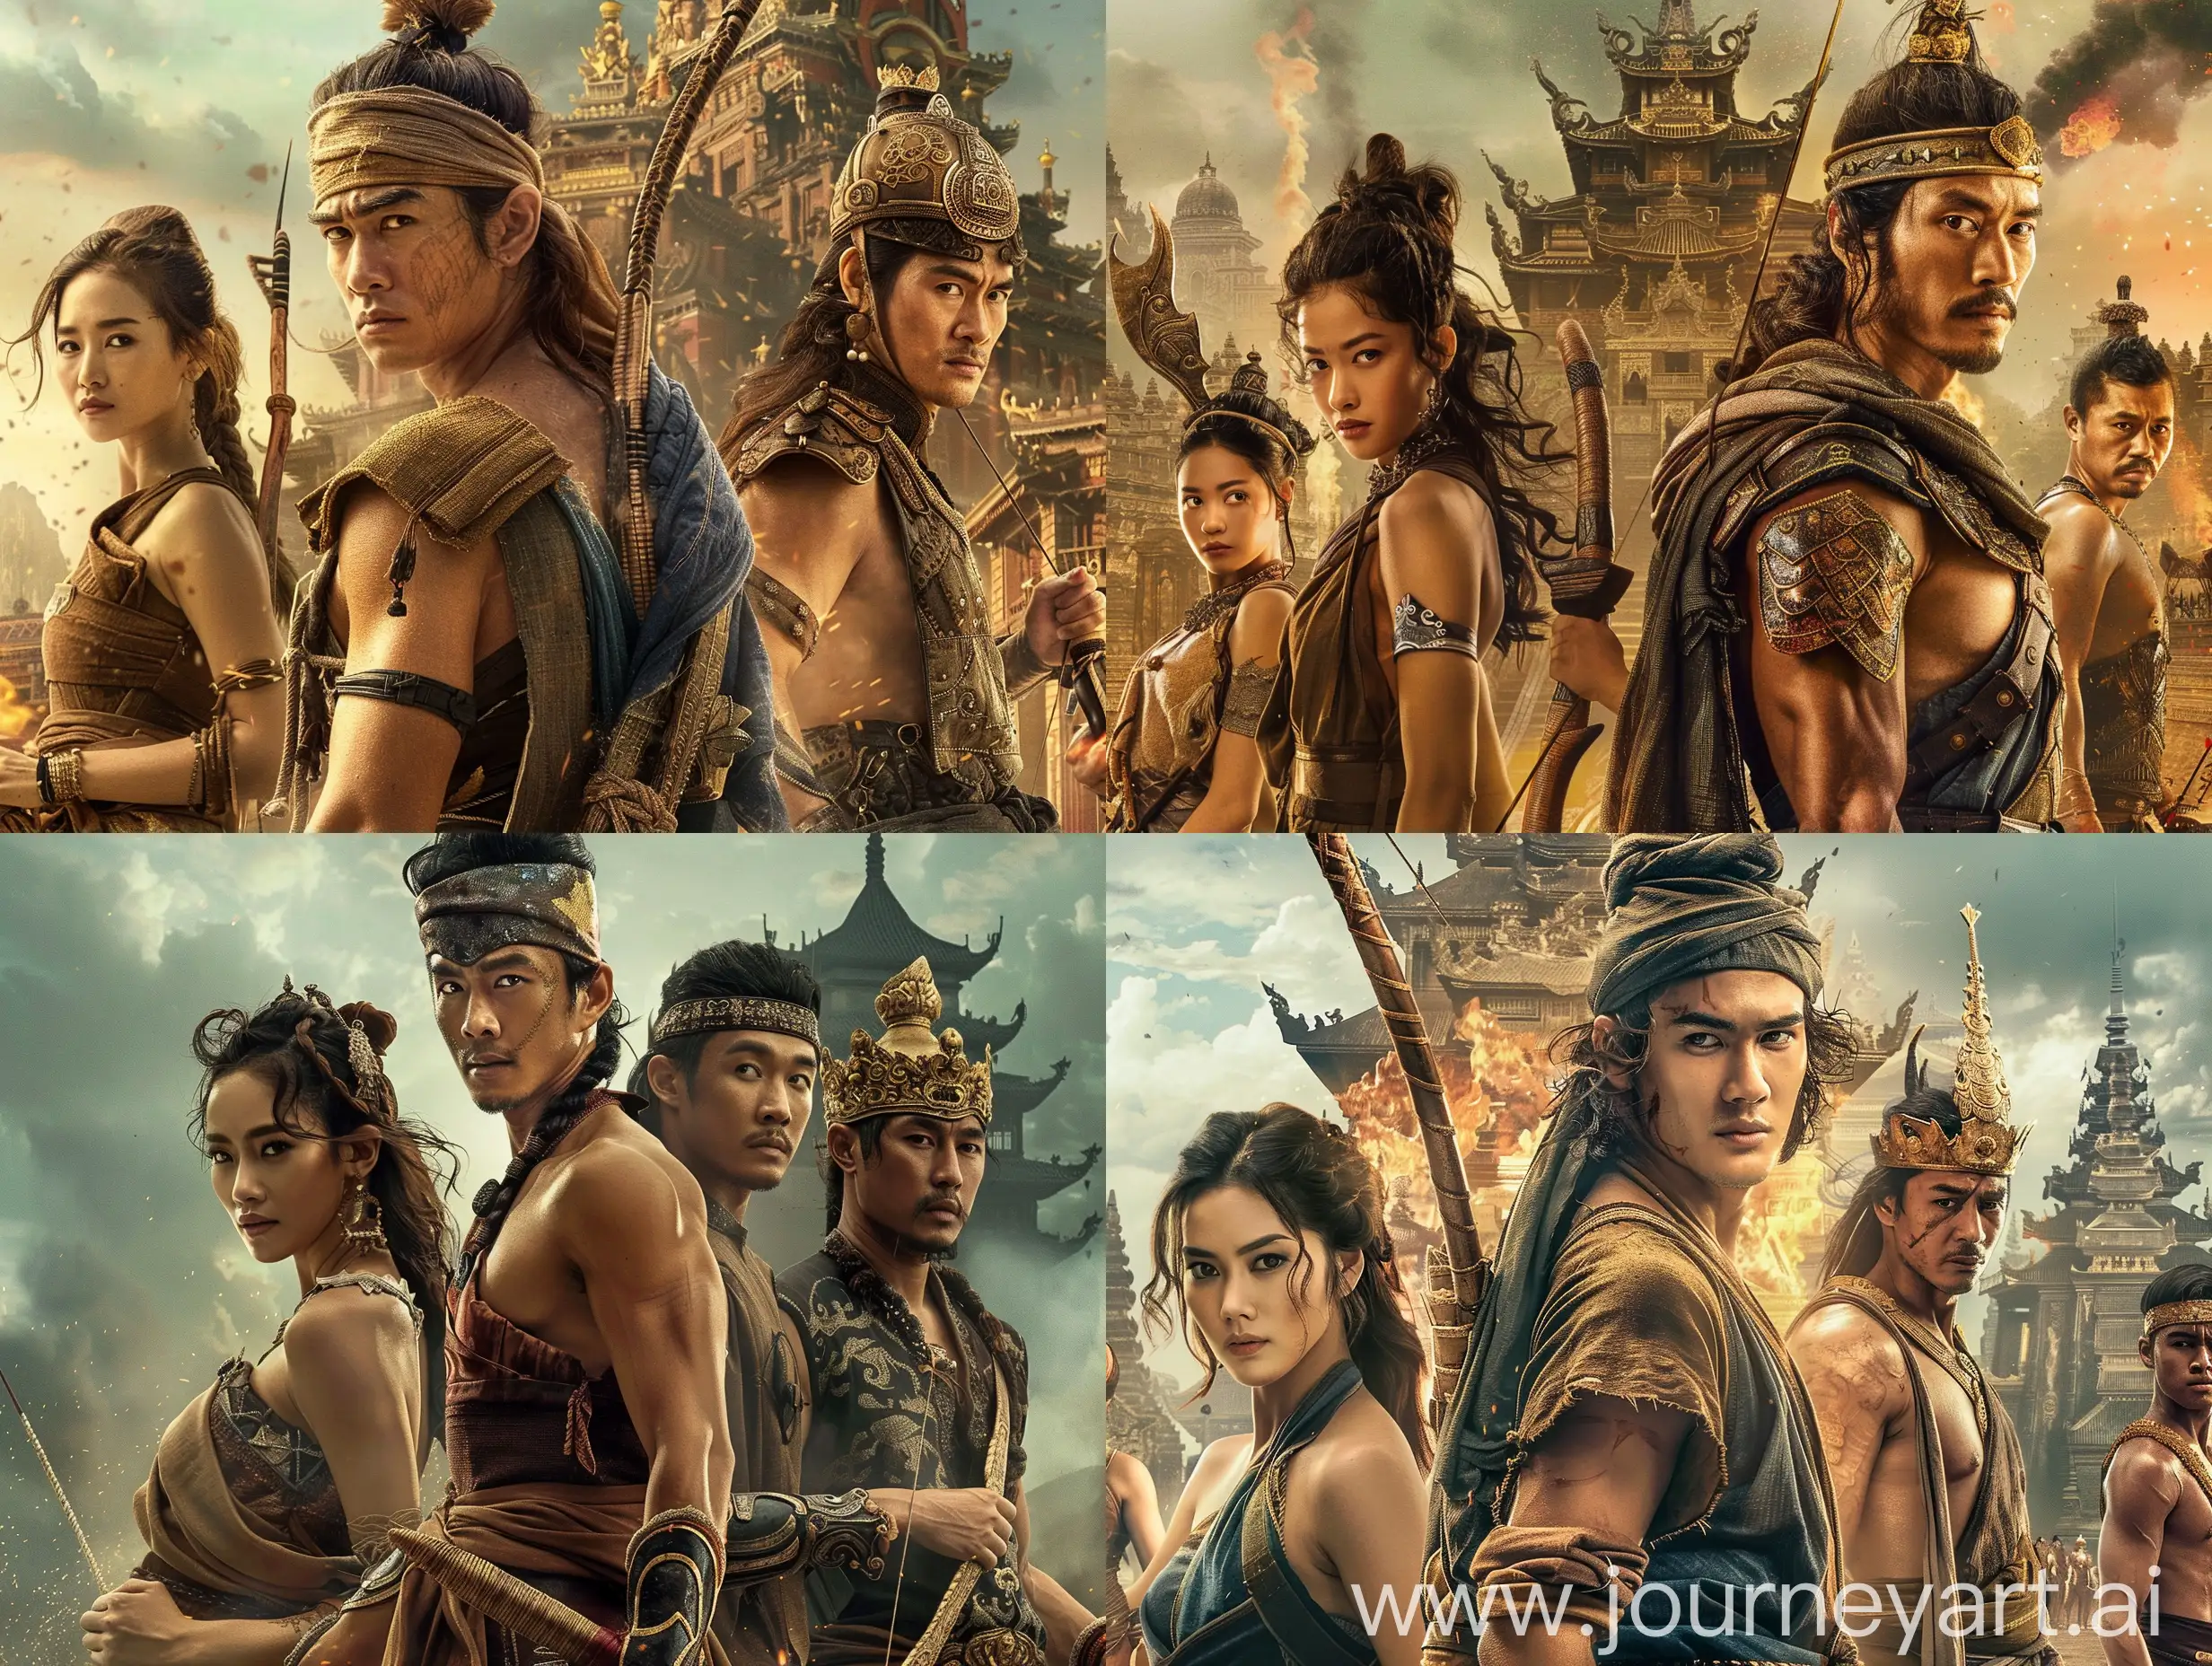 Epic-Indonesian-Historical-Film-Poster-Warriors-of-Majapahit-Kingdom